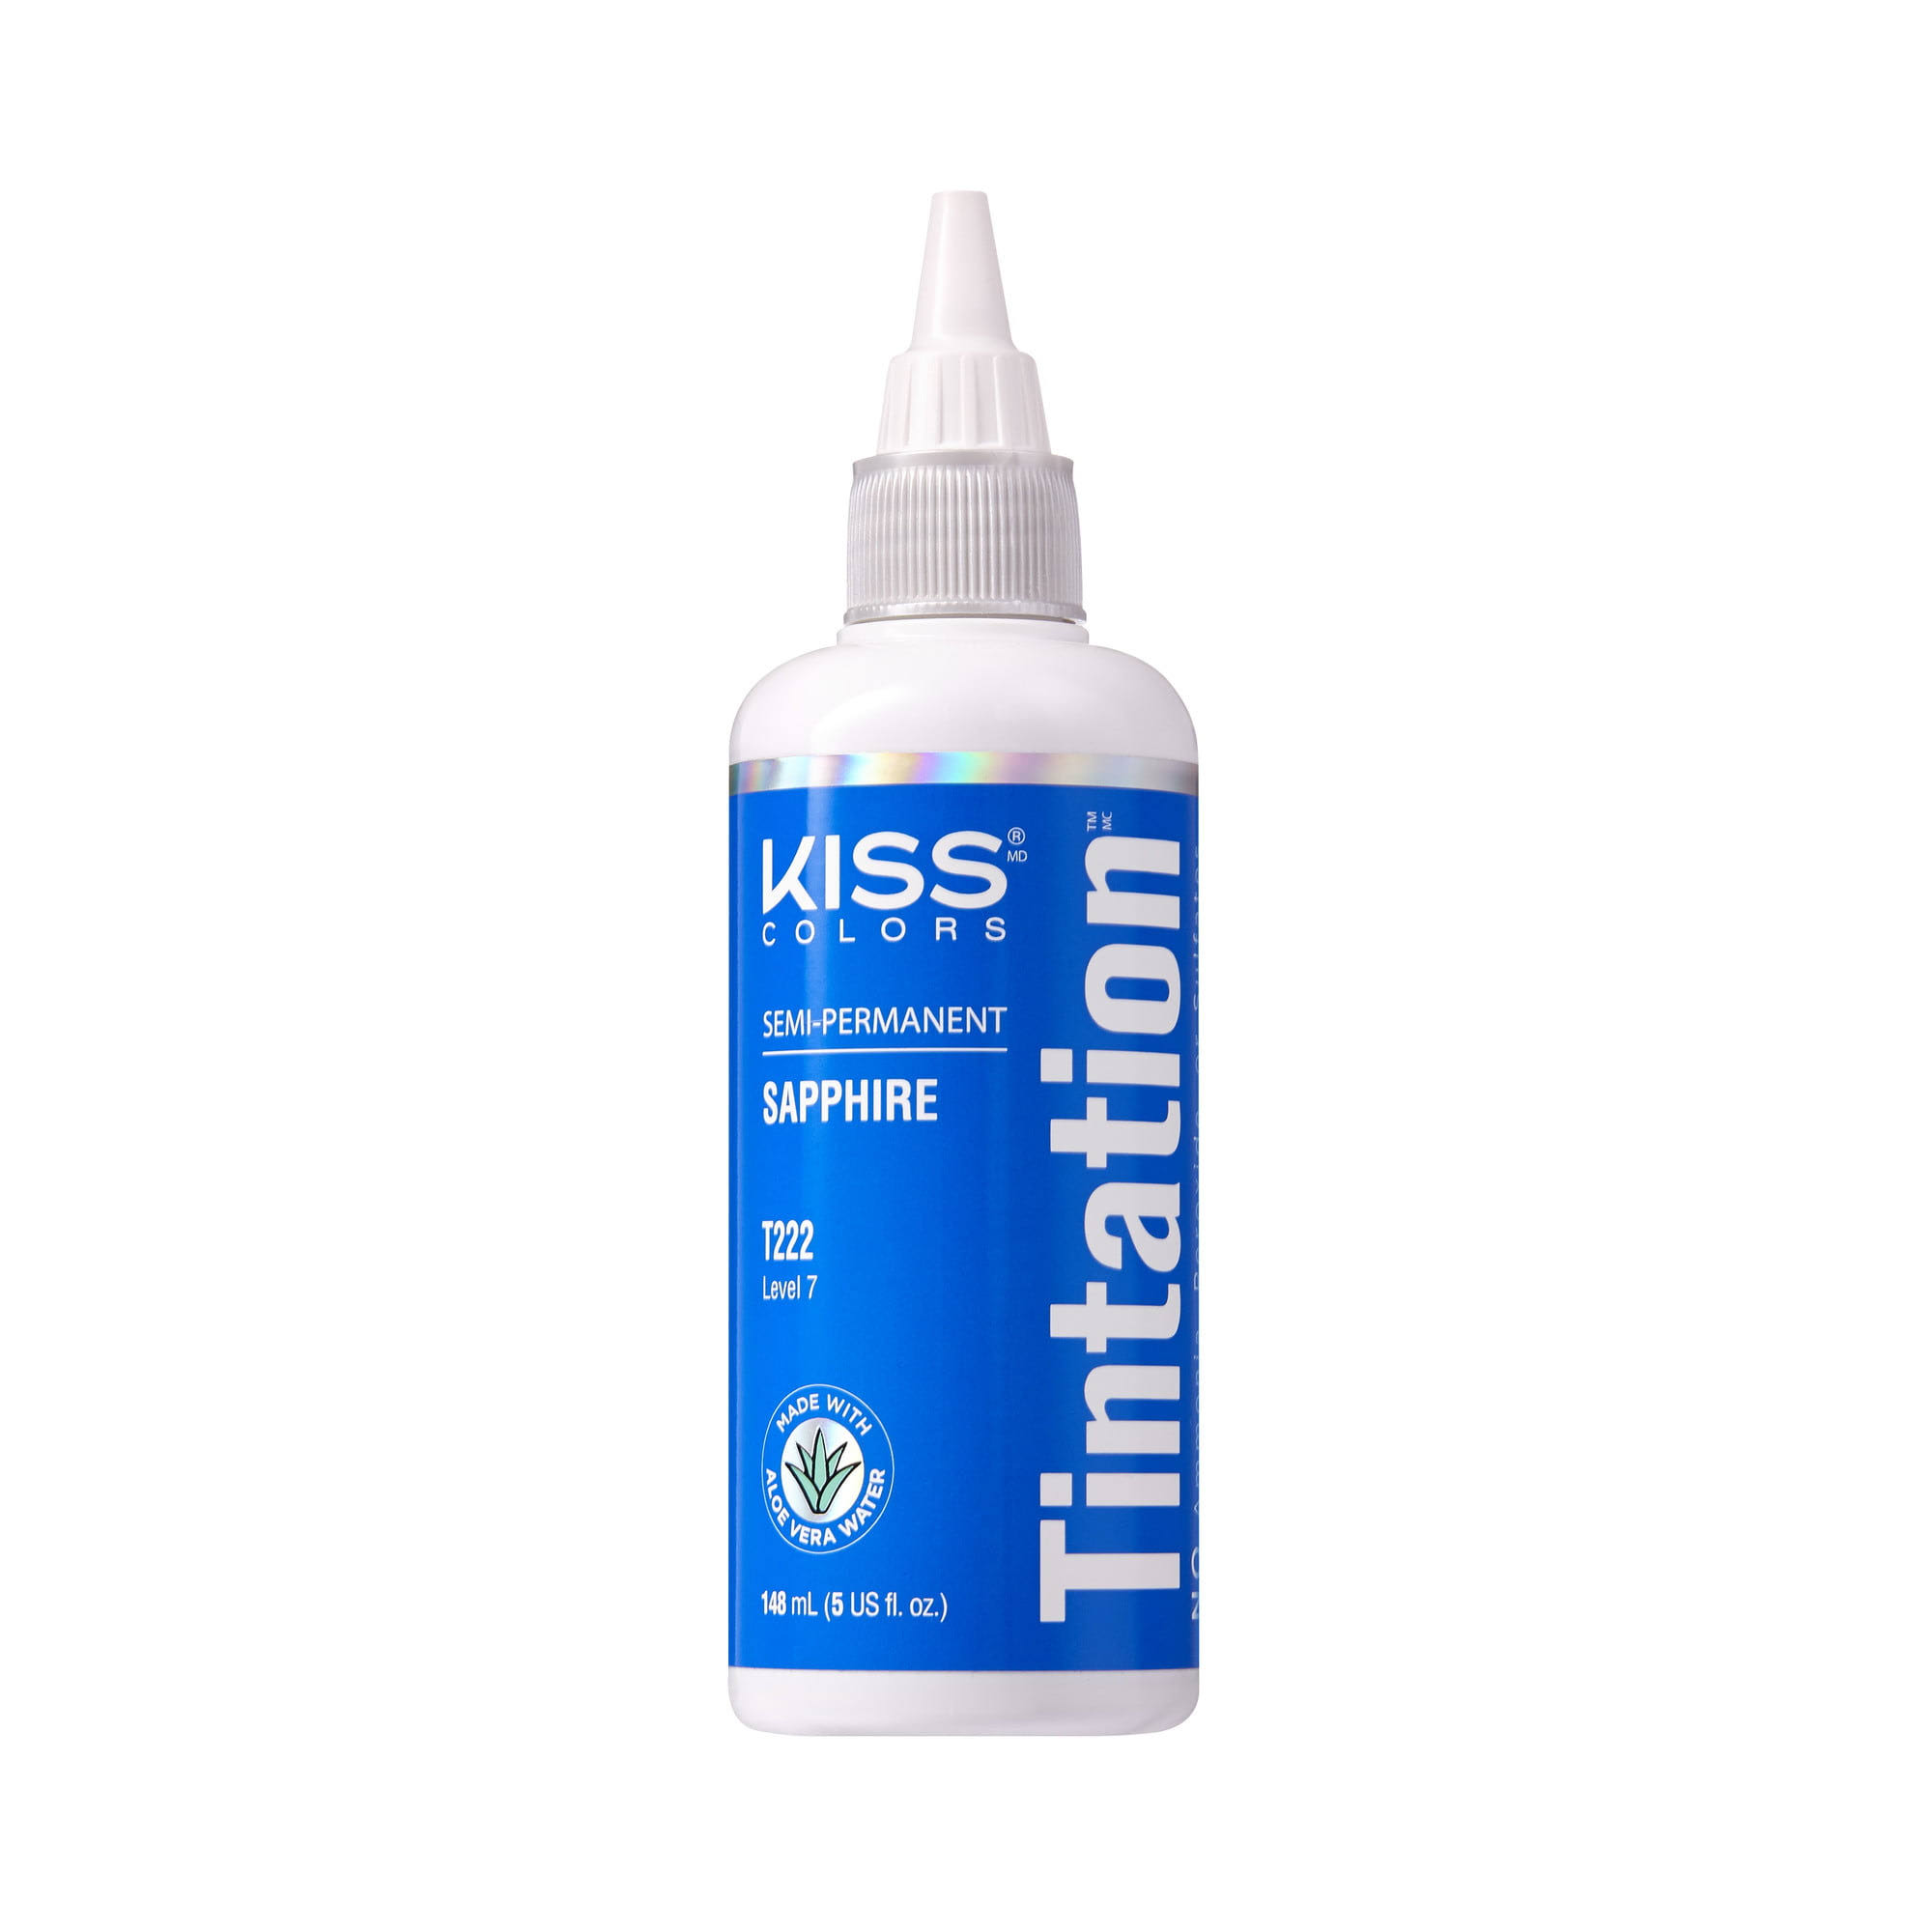 Kiss Tintation Semi-Permanent Hair Color Treatment 148 mL (5 US fl.oz)